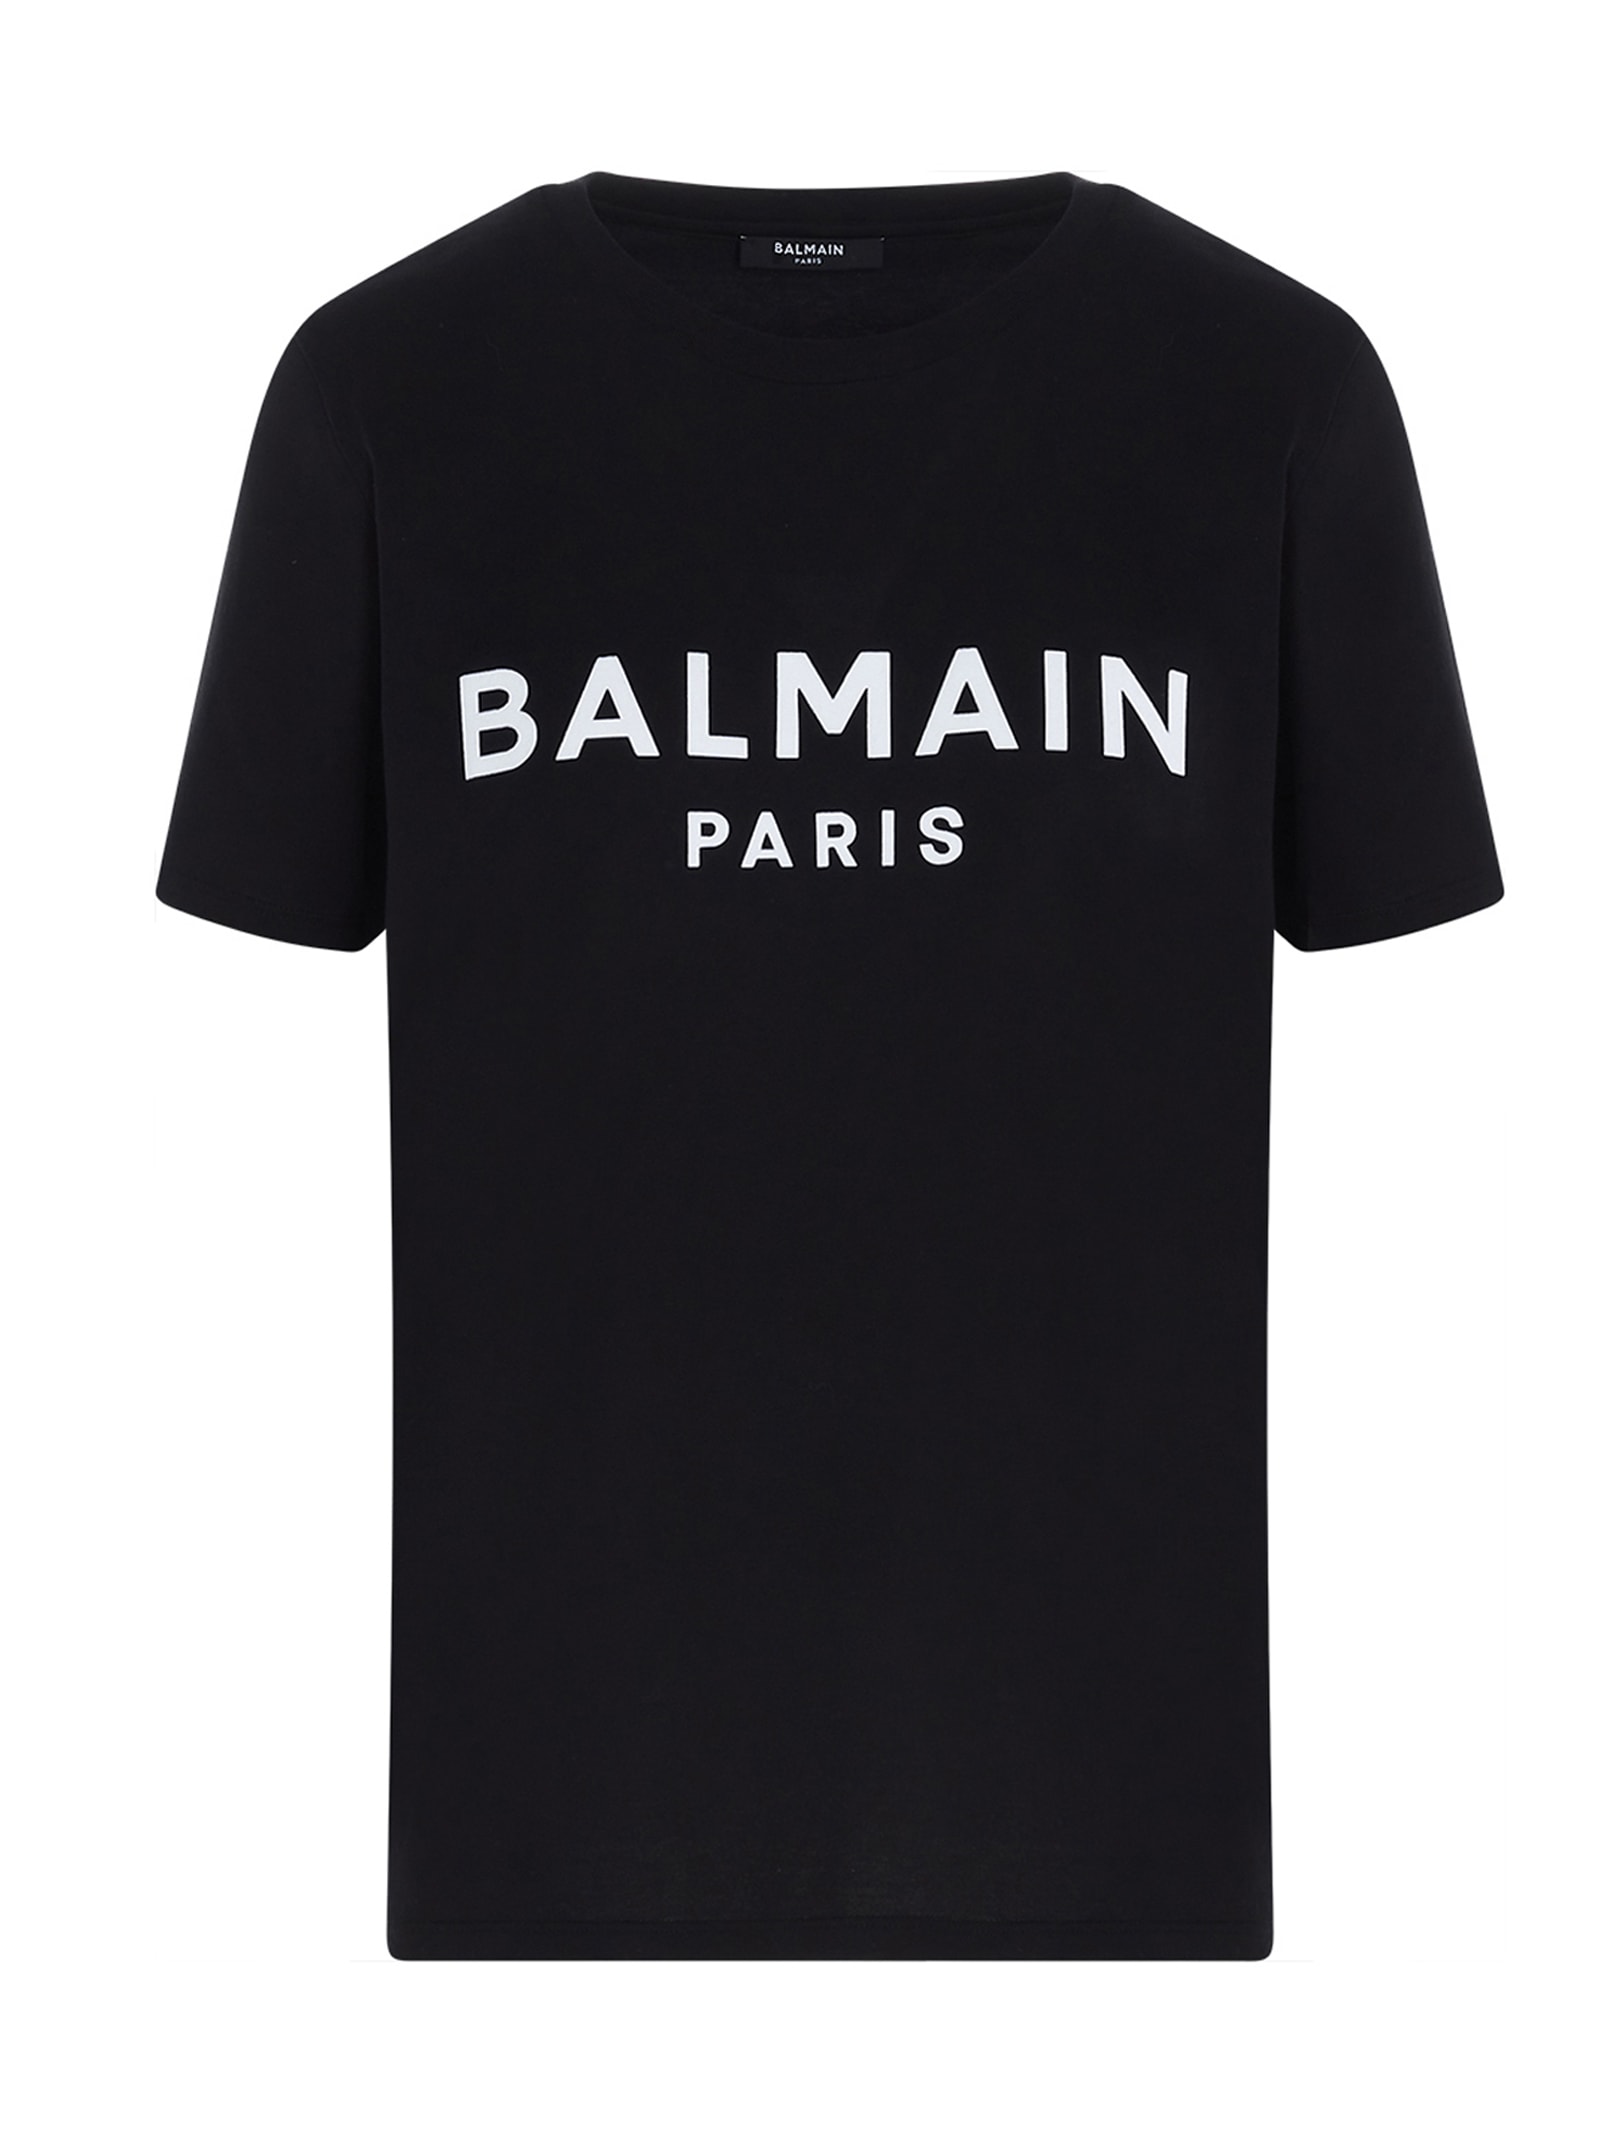 Balmain Tshirt In Black